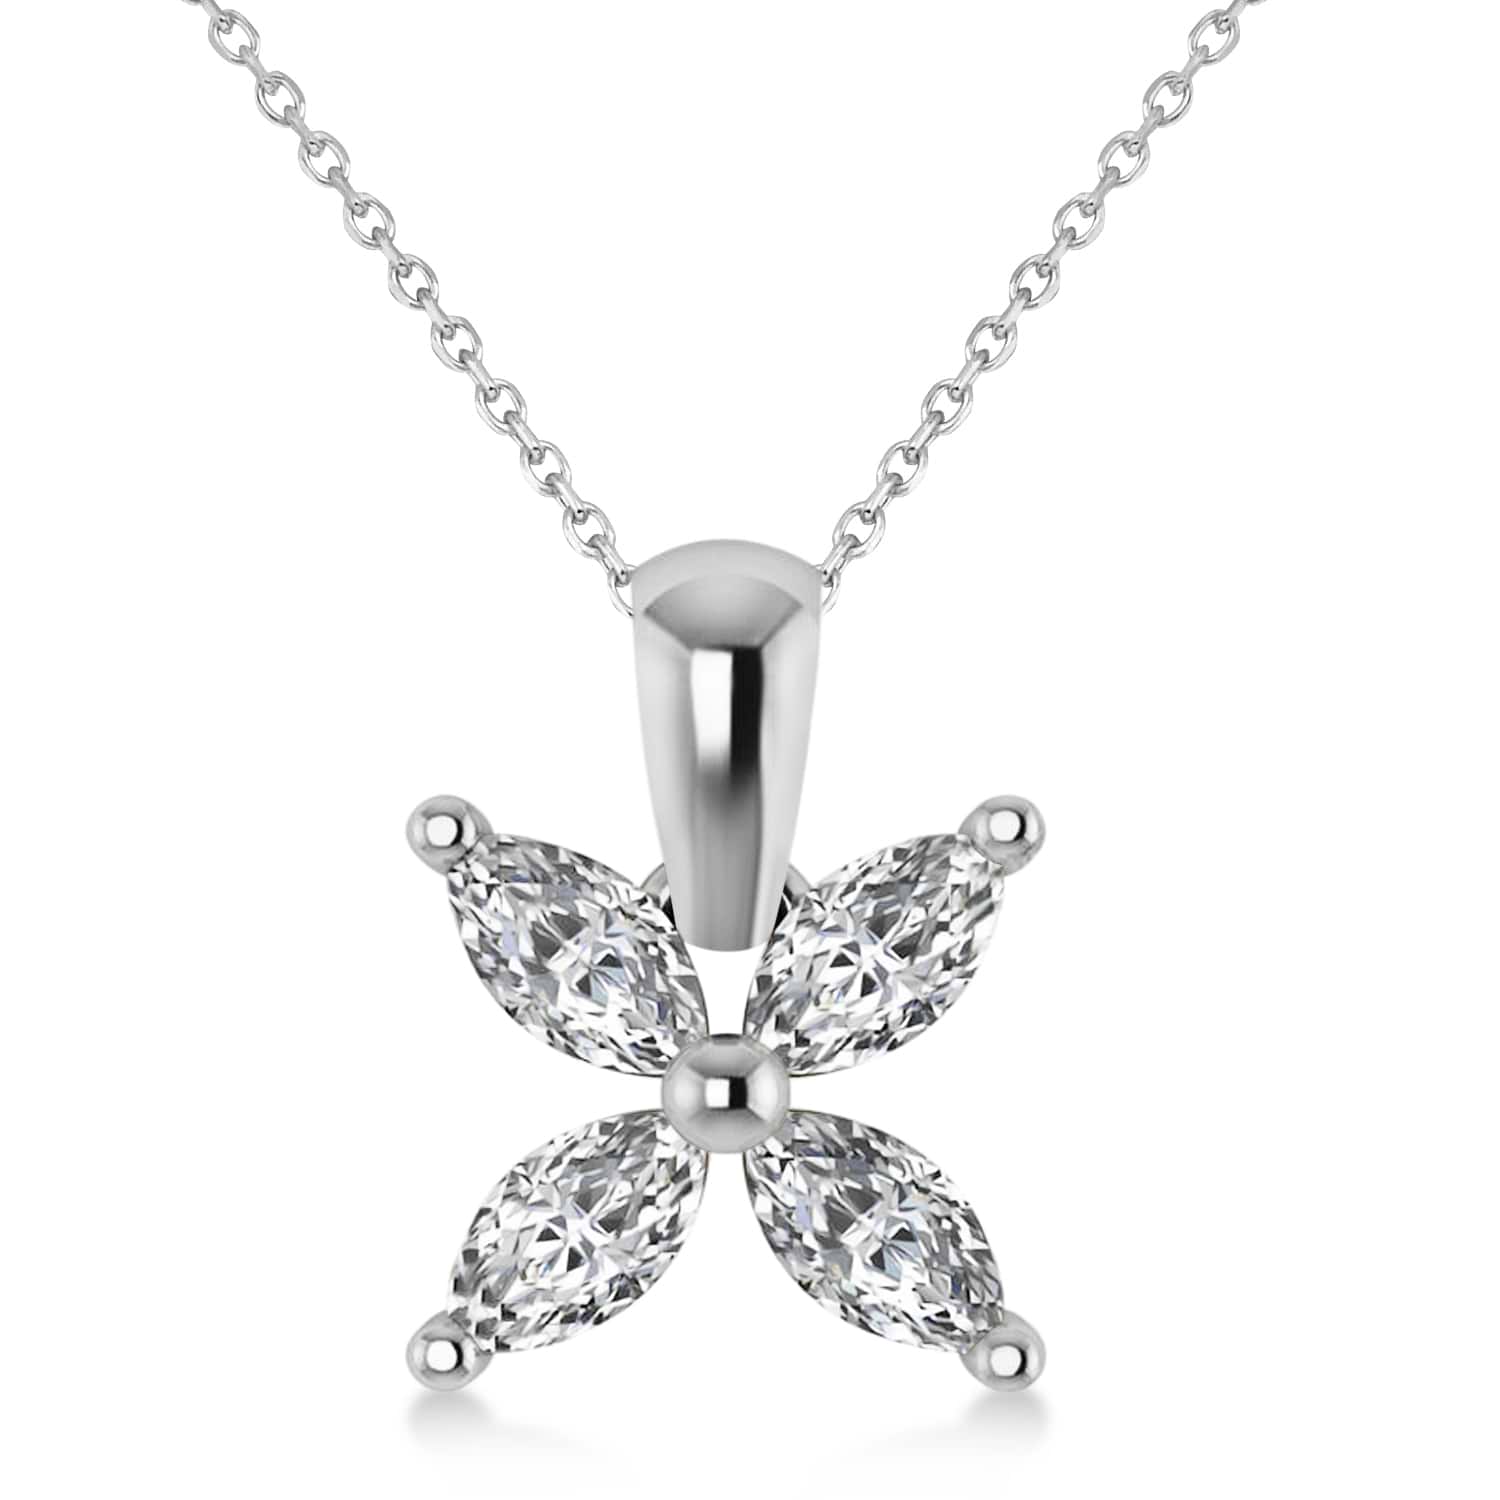 Diamond Marquise Flower Pendant Necklace 14k White Gold (1.00 ctw)